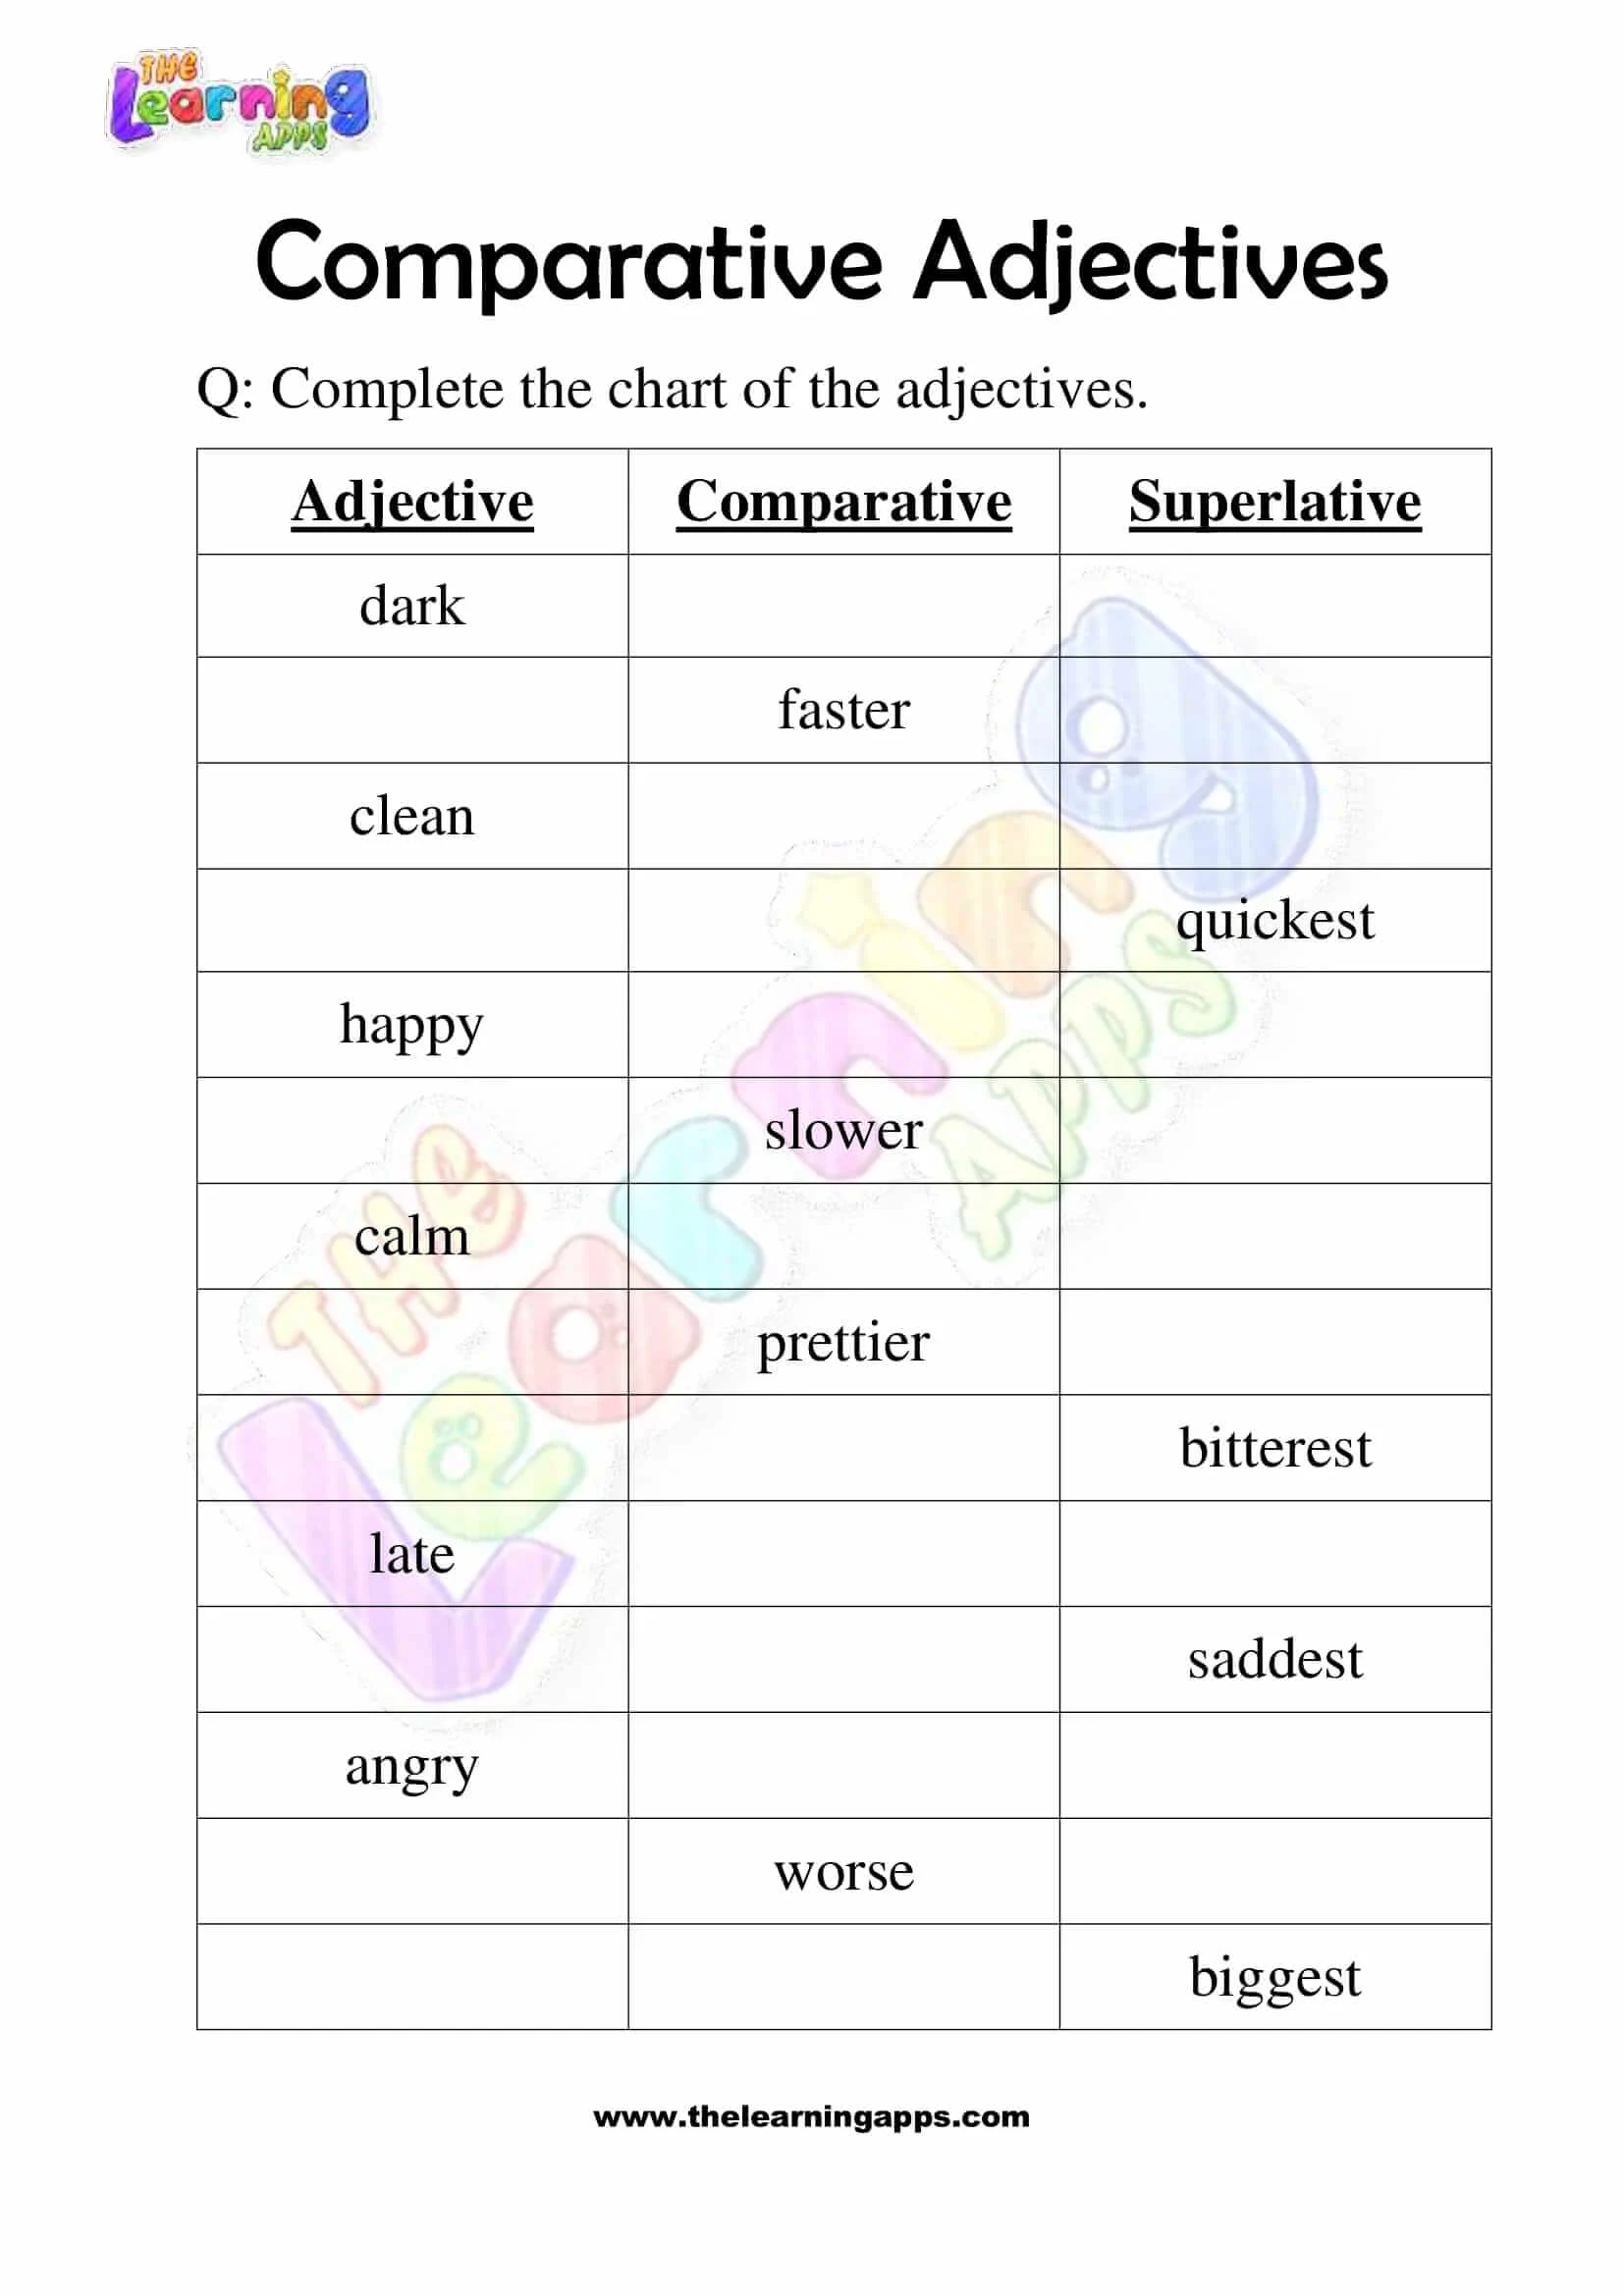 Worksheet On Comparative Adjectives For Grade 2